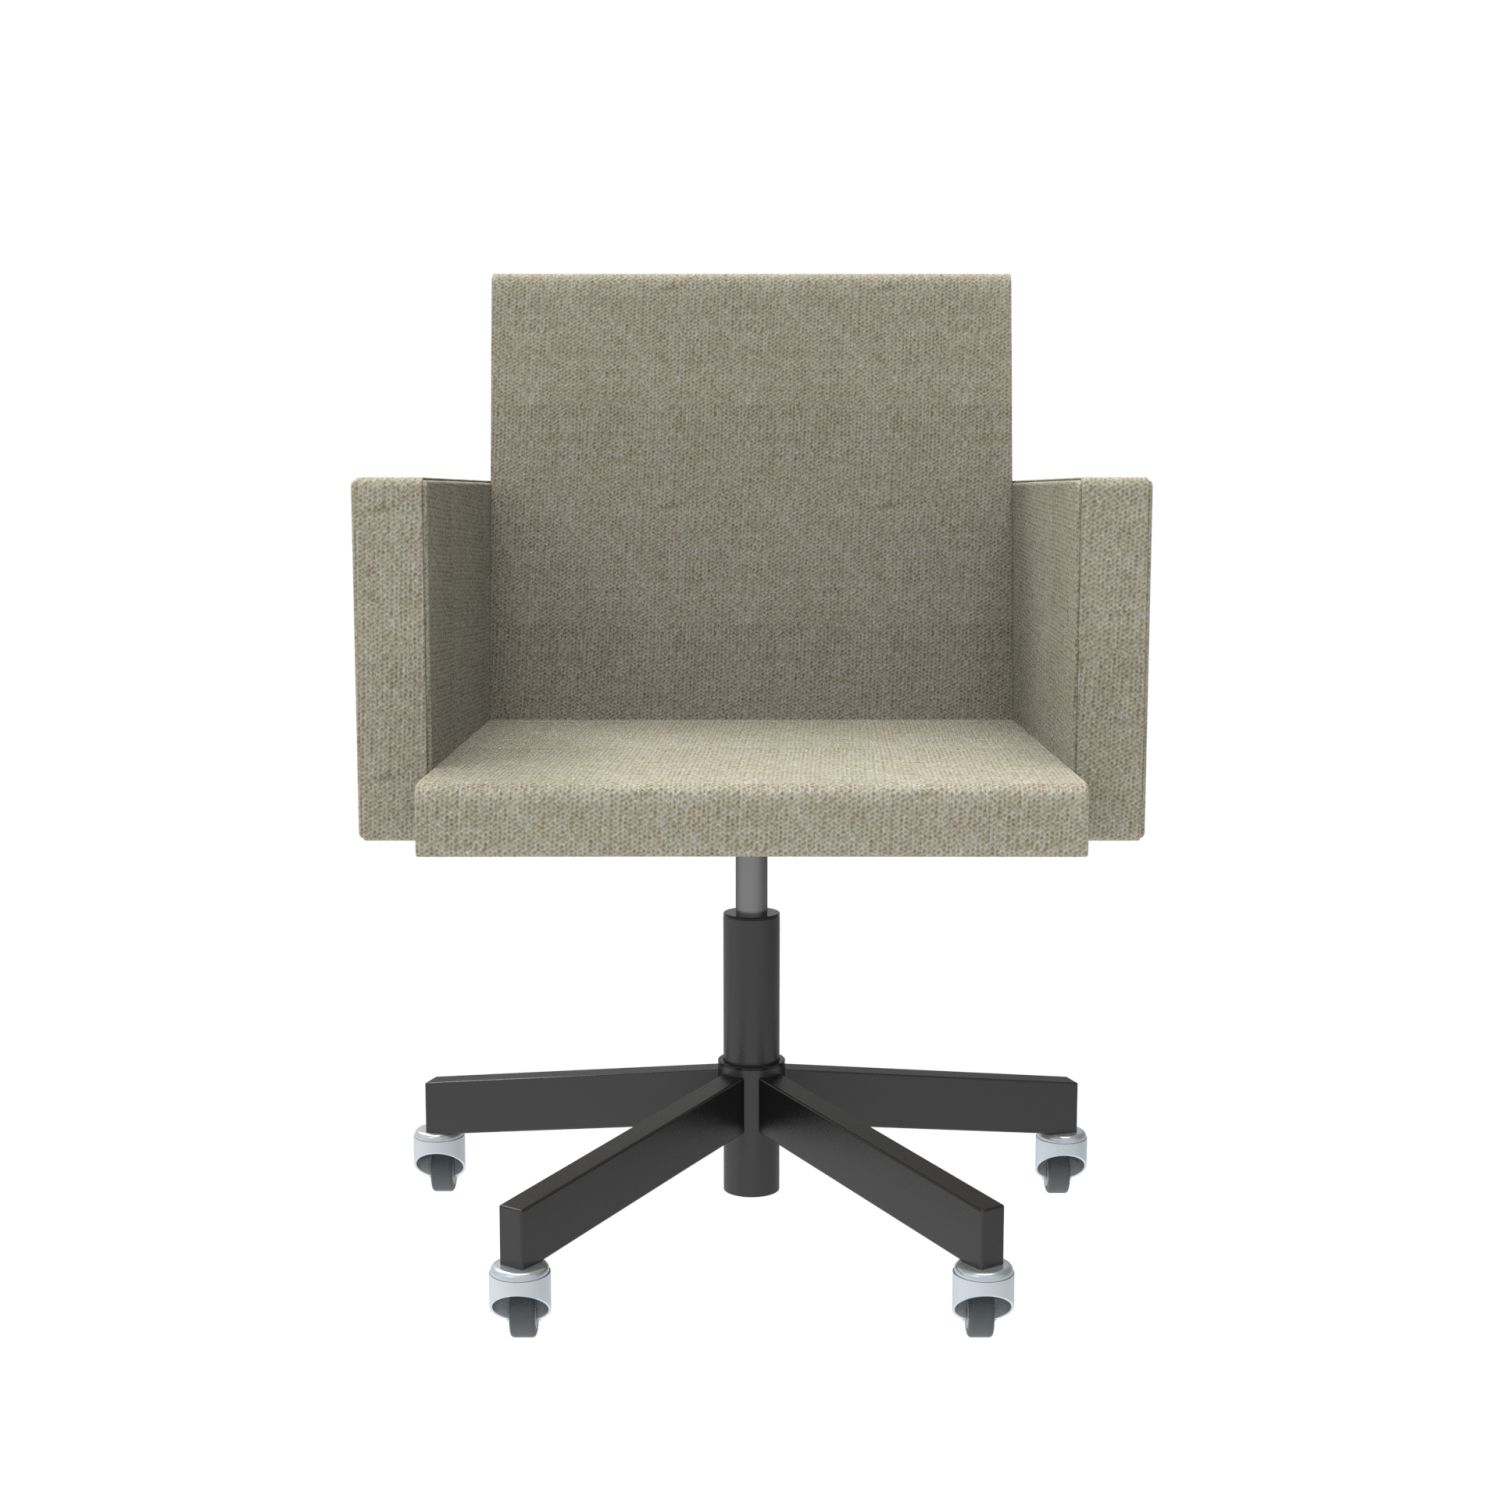 lensvelt atelier van lieshout office chair with armrests moss stone grey 11 black ral9005 soft rolls